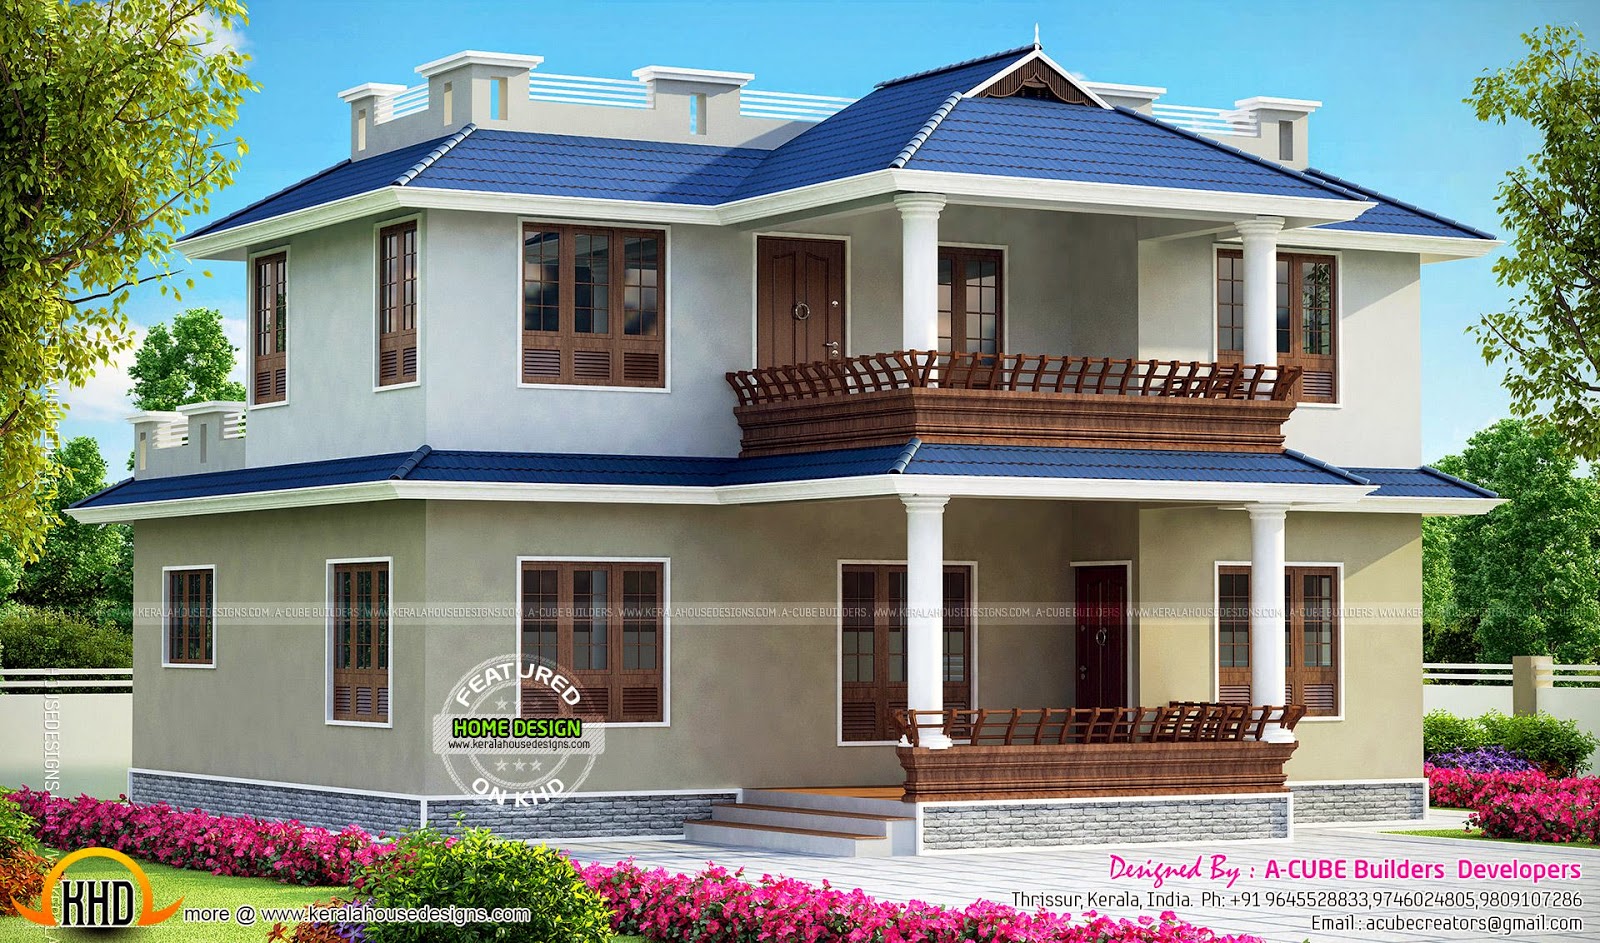 3 bedroom  double storied Kerala  home  Kerala  home  design  